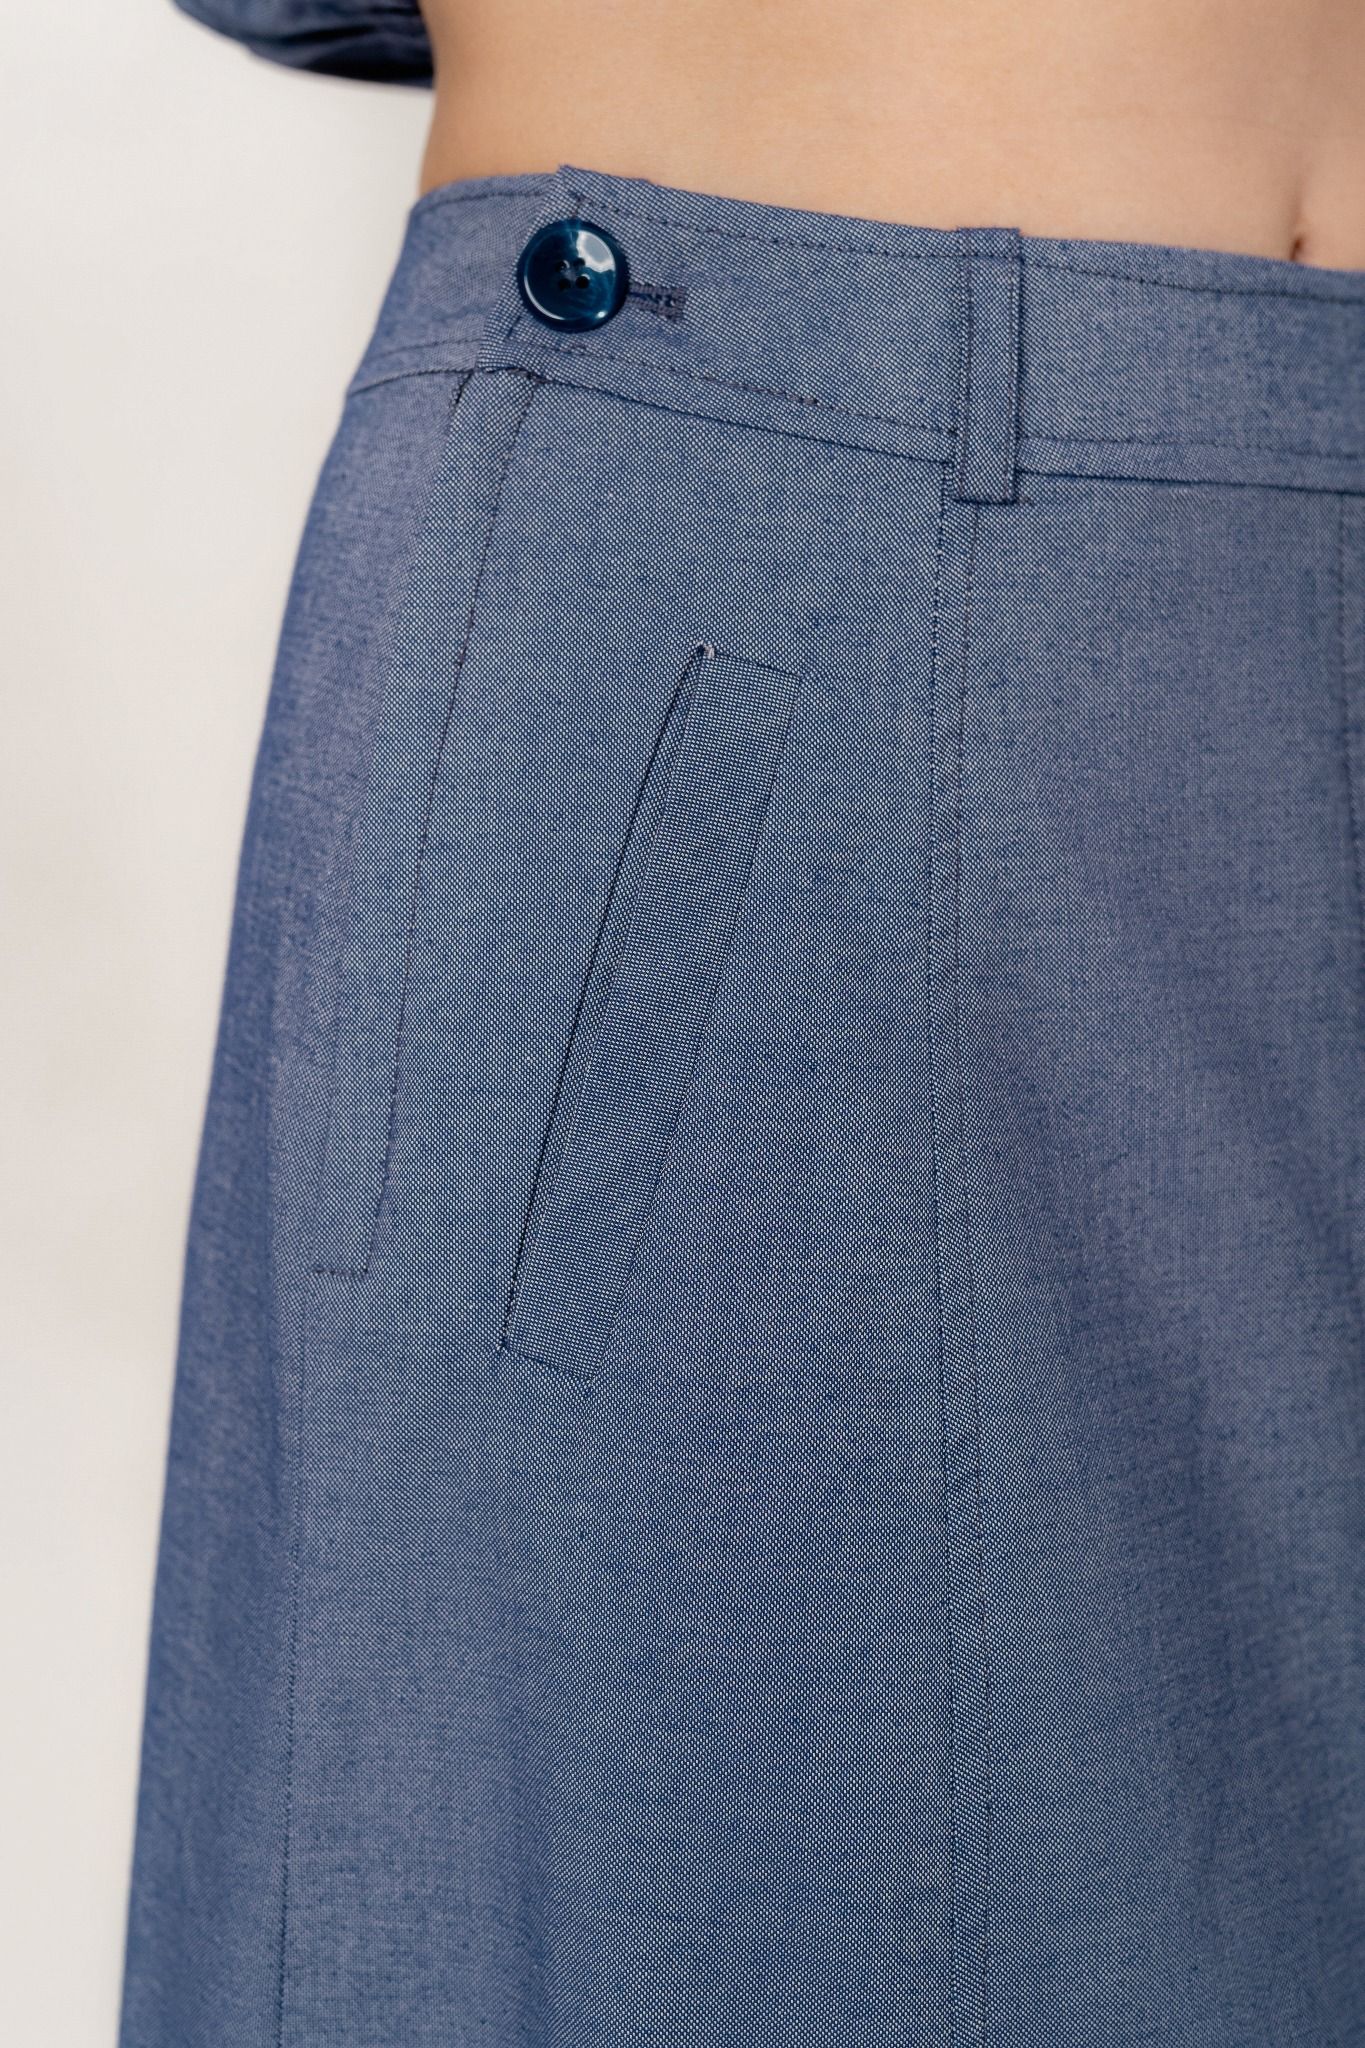  Blue A-Line Midi Skirt 